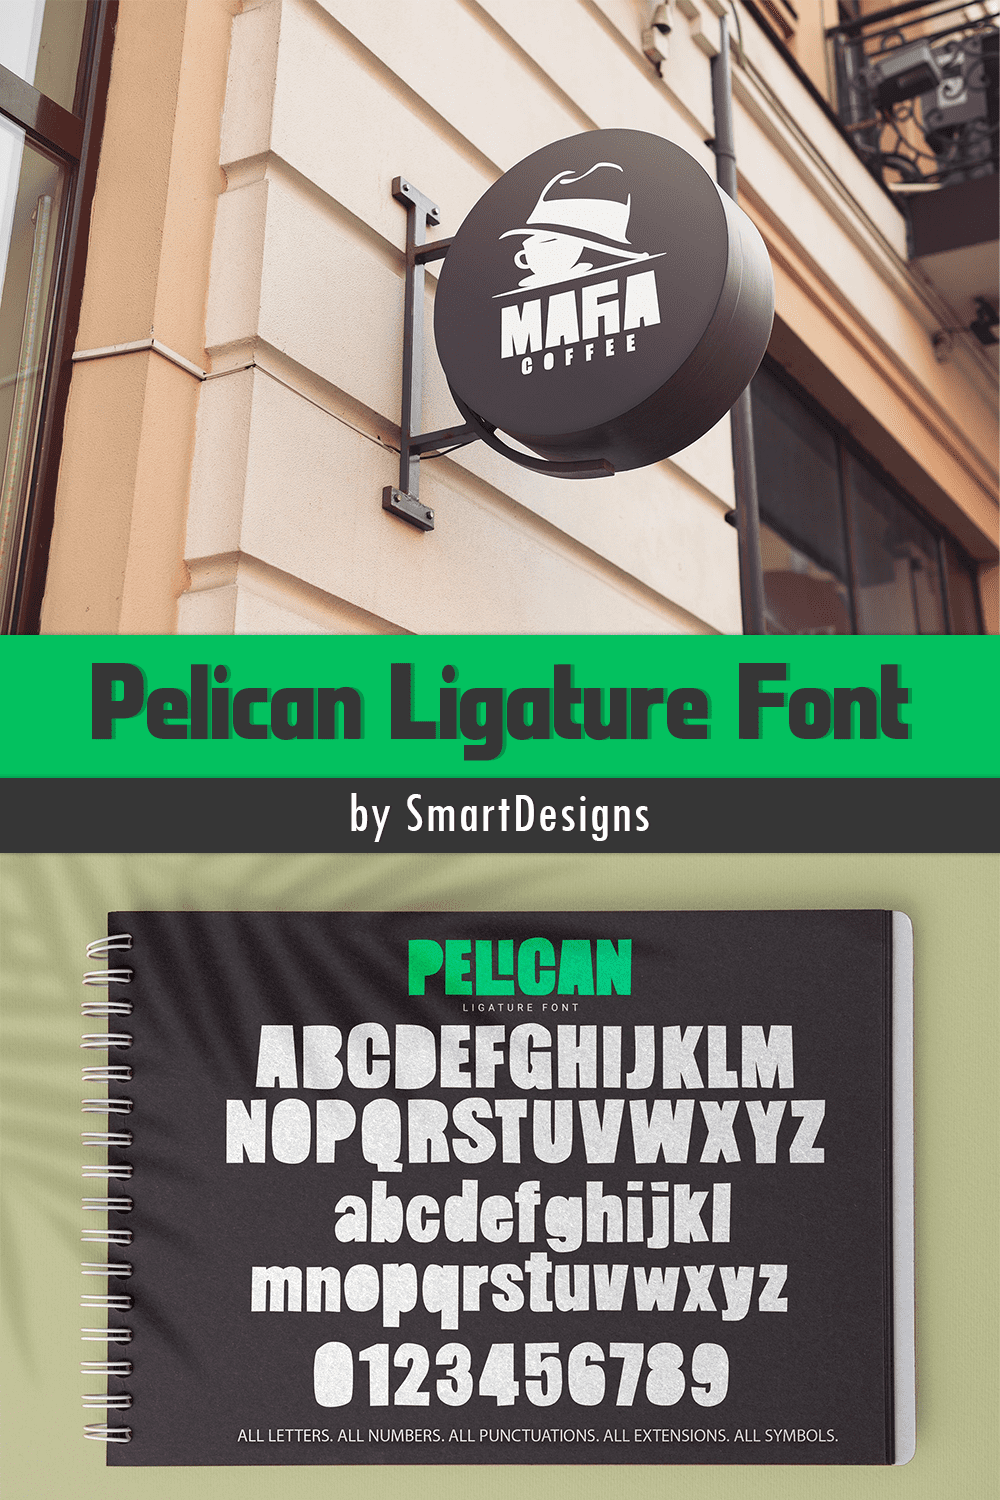 Pelican ligature font of pinterest.